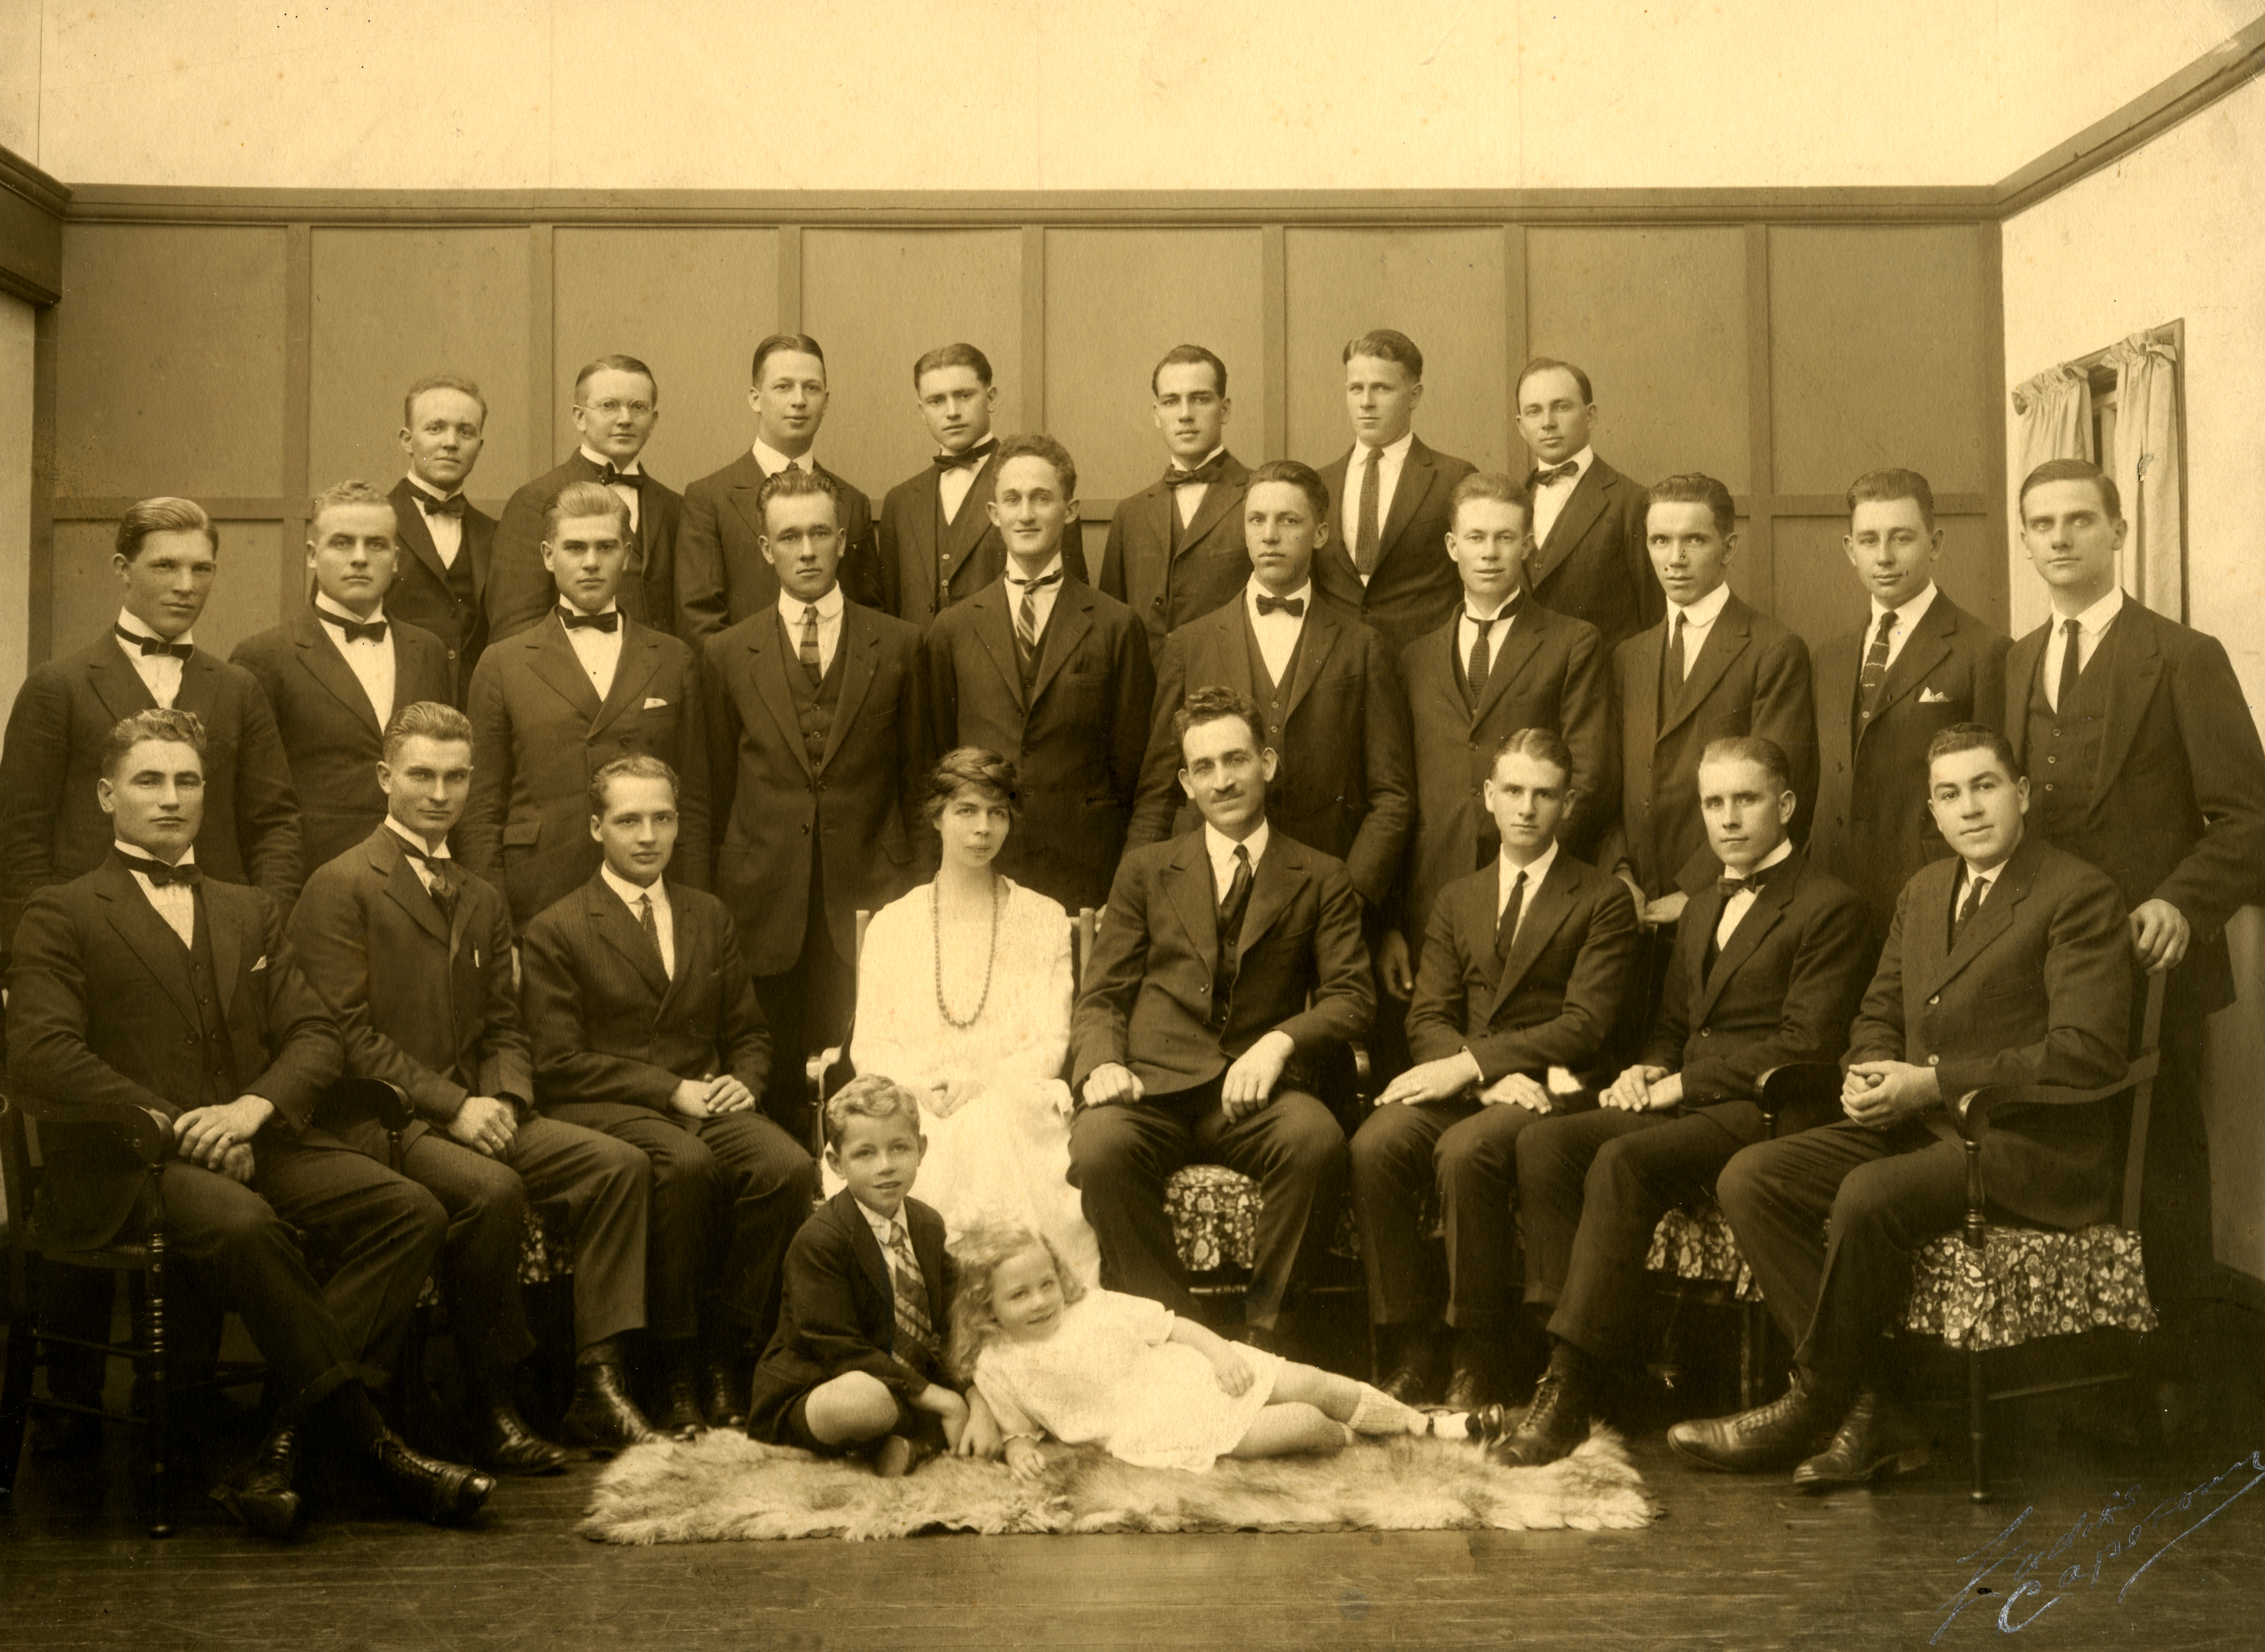 Mission Conference, Dec 1923 - Jan 1924